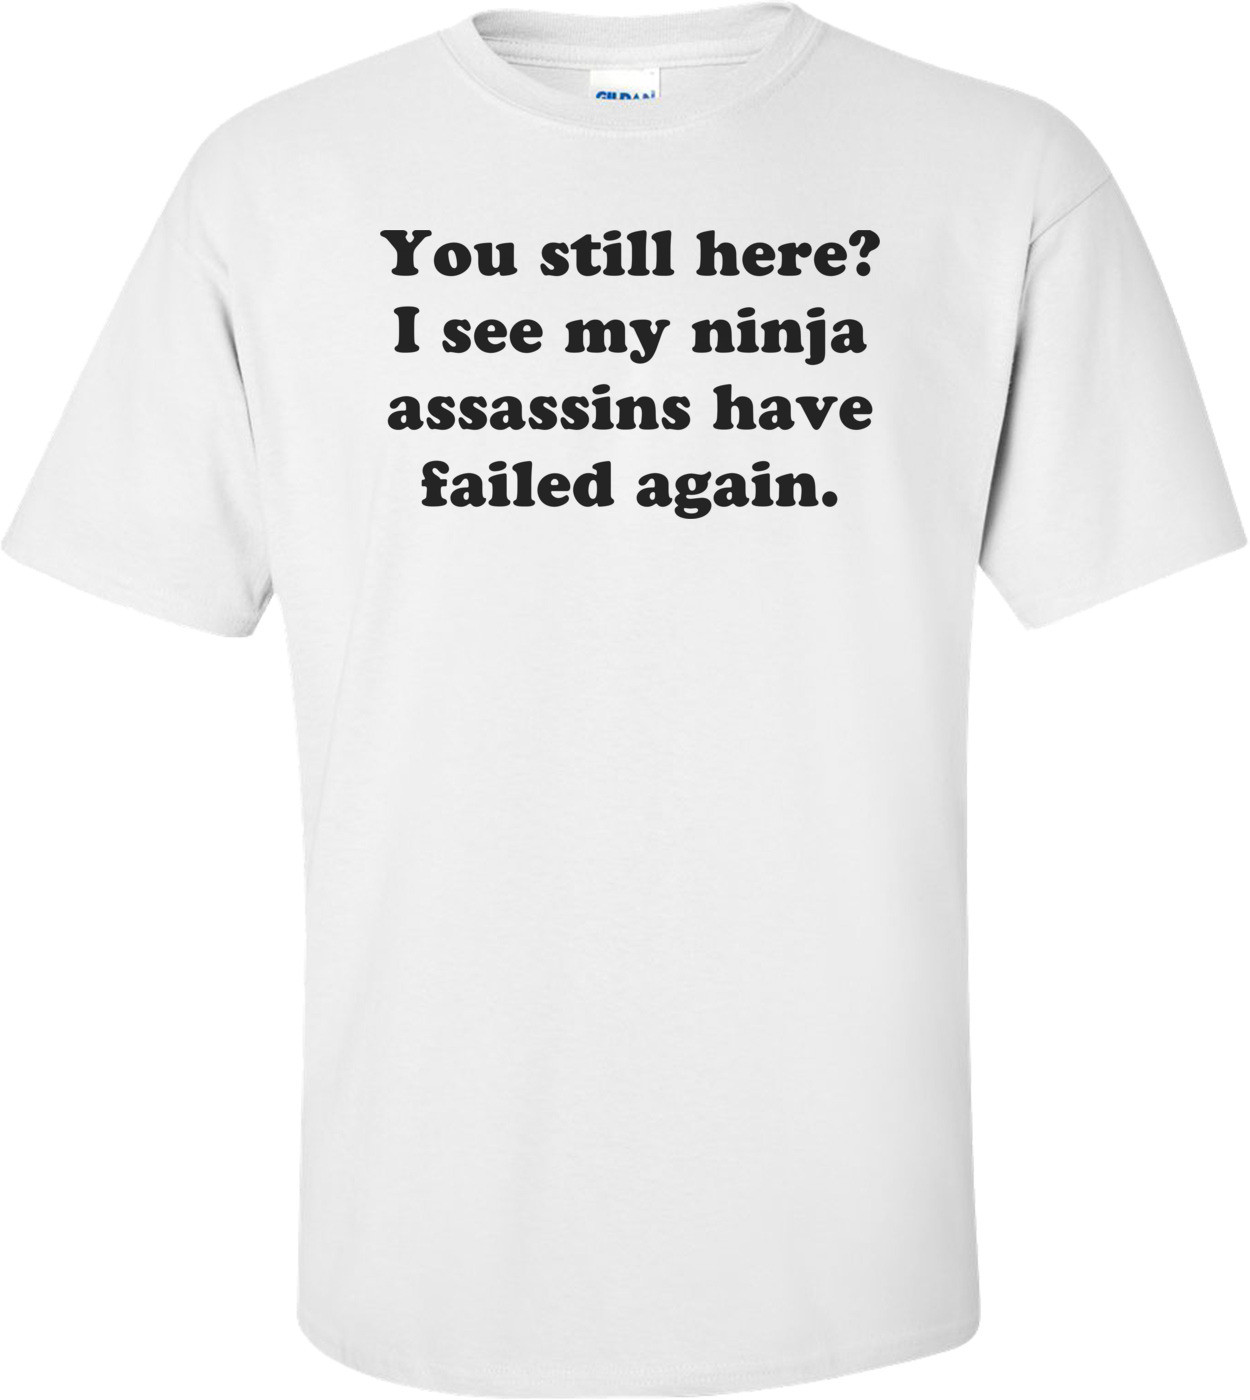 You still here? I see my ninja assassins have failed again. Shirt